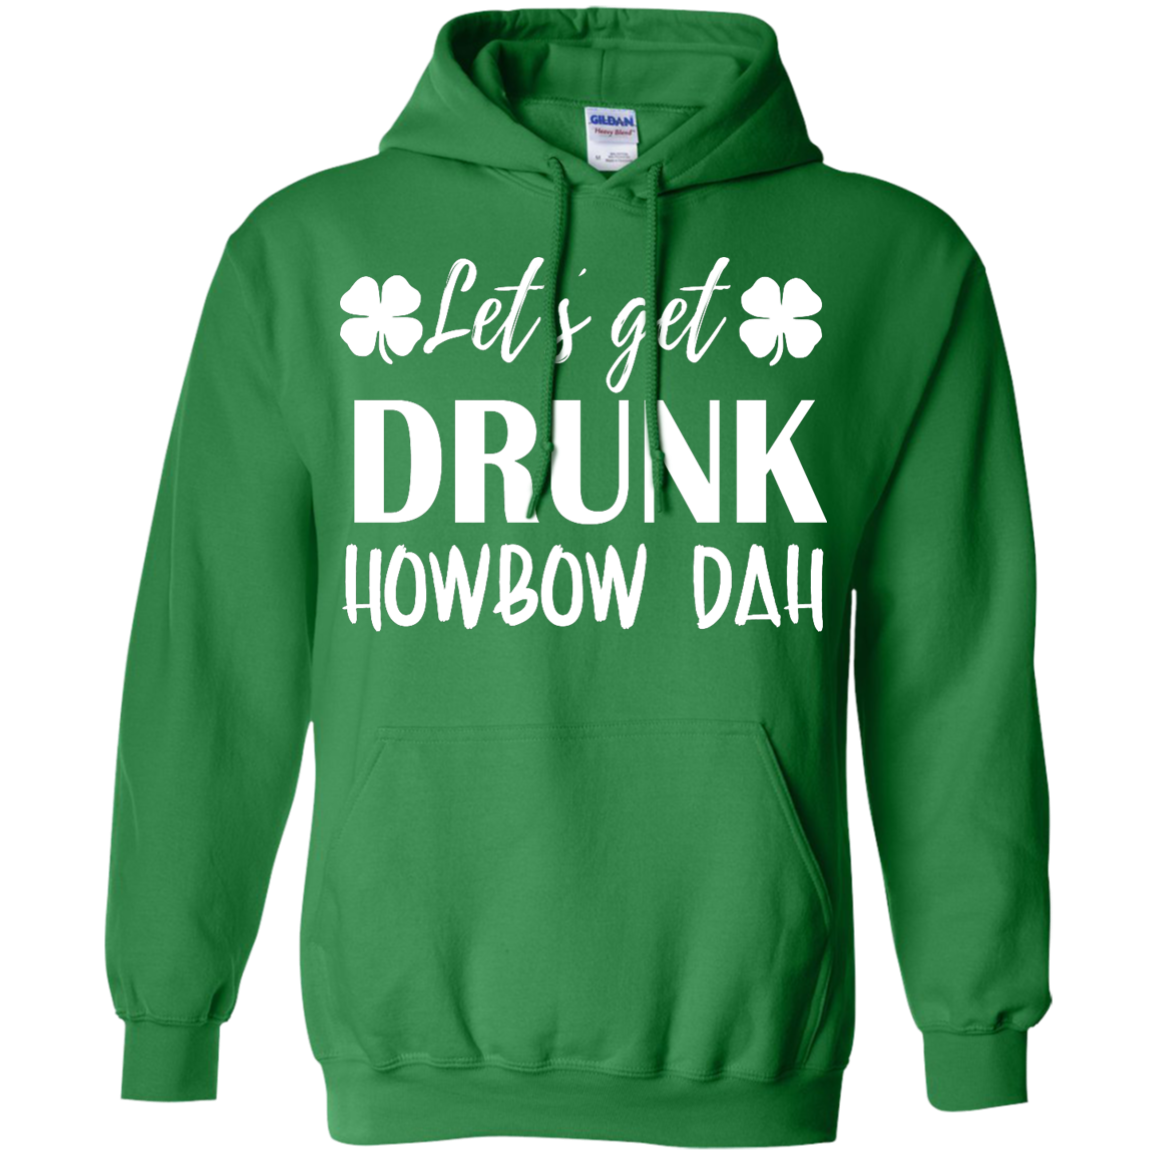 St. Patrick's day: Let's Get Drunk Howbow Dah shirt, sweater